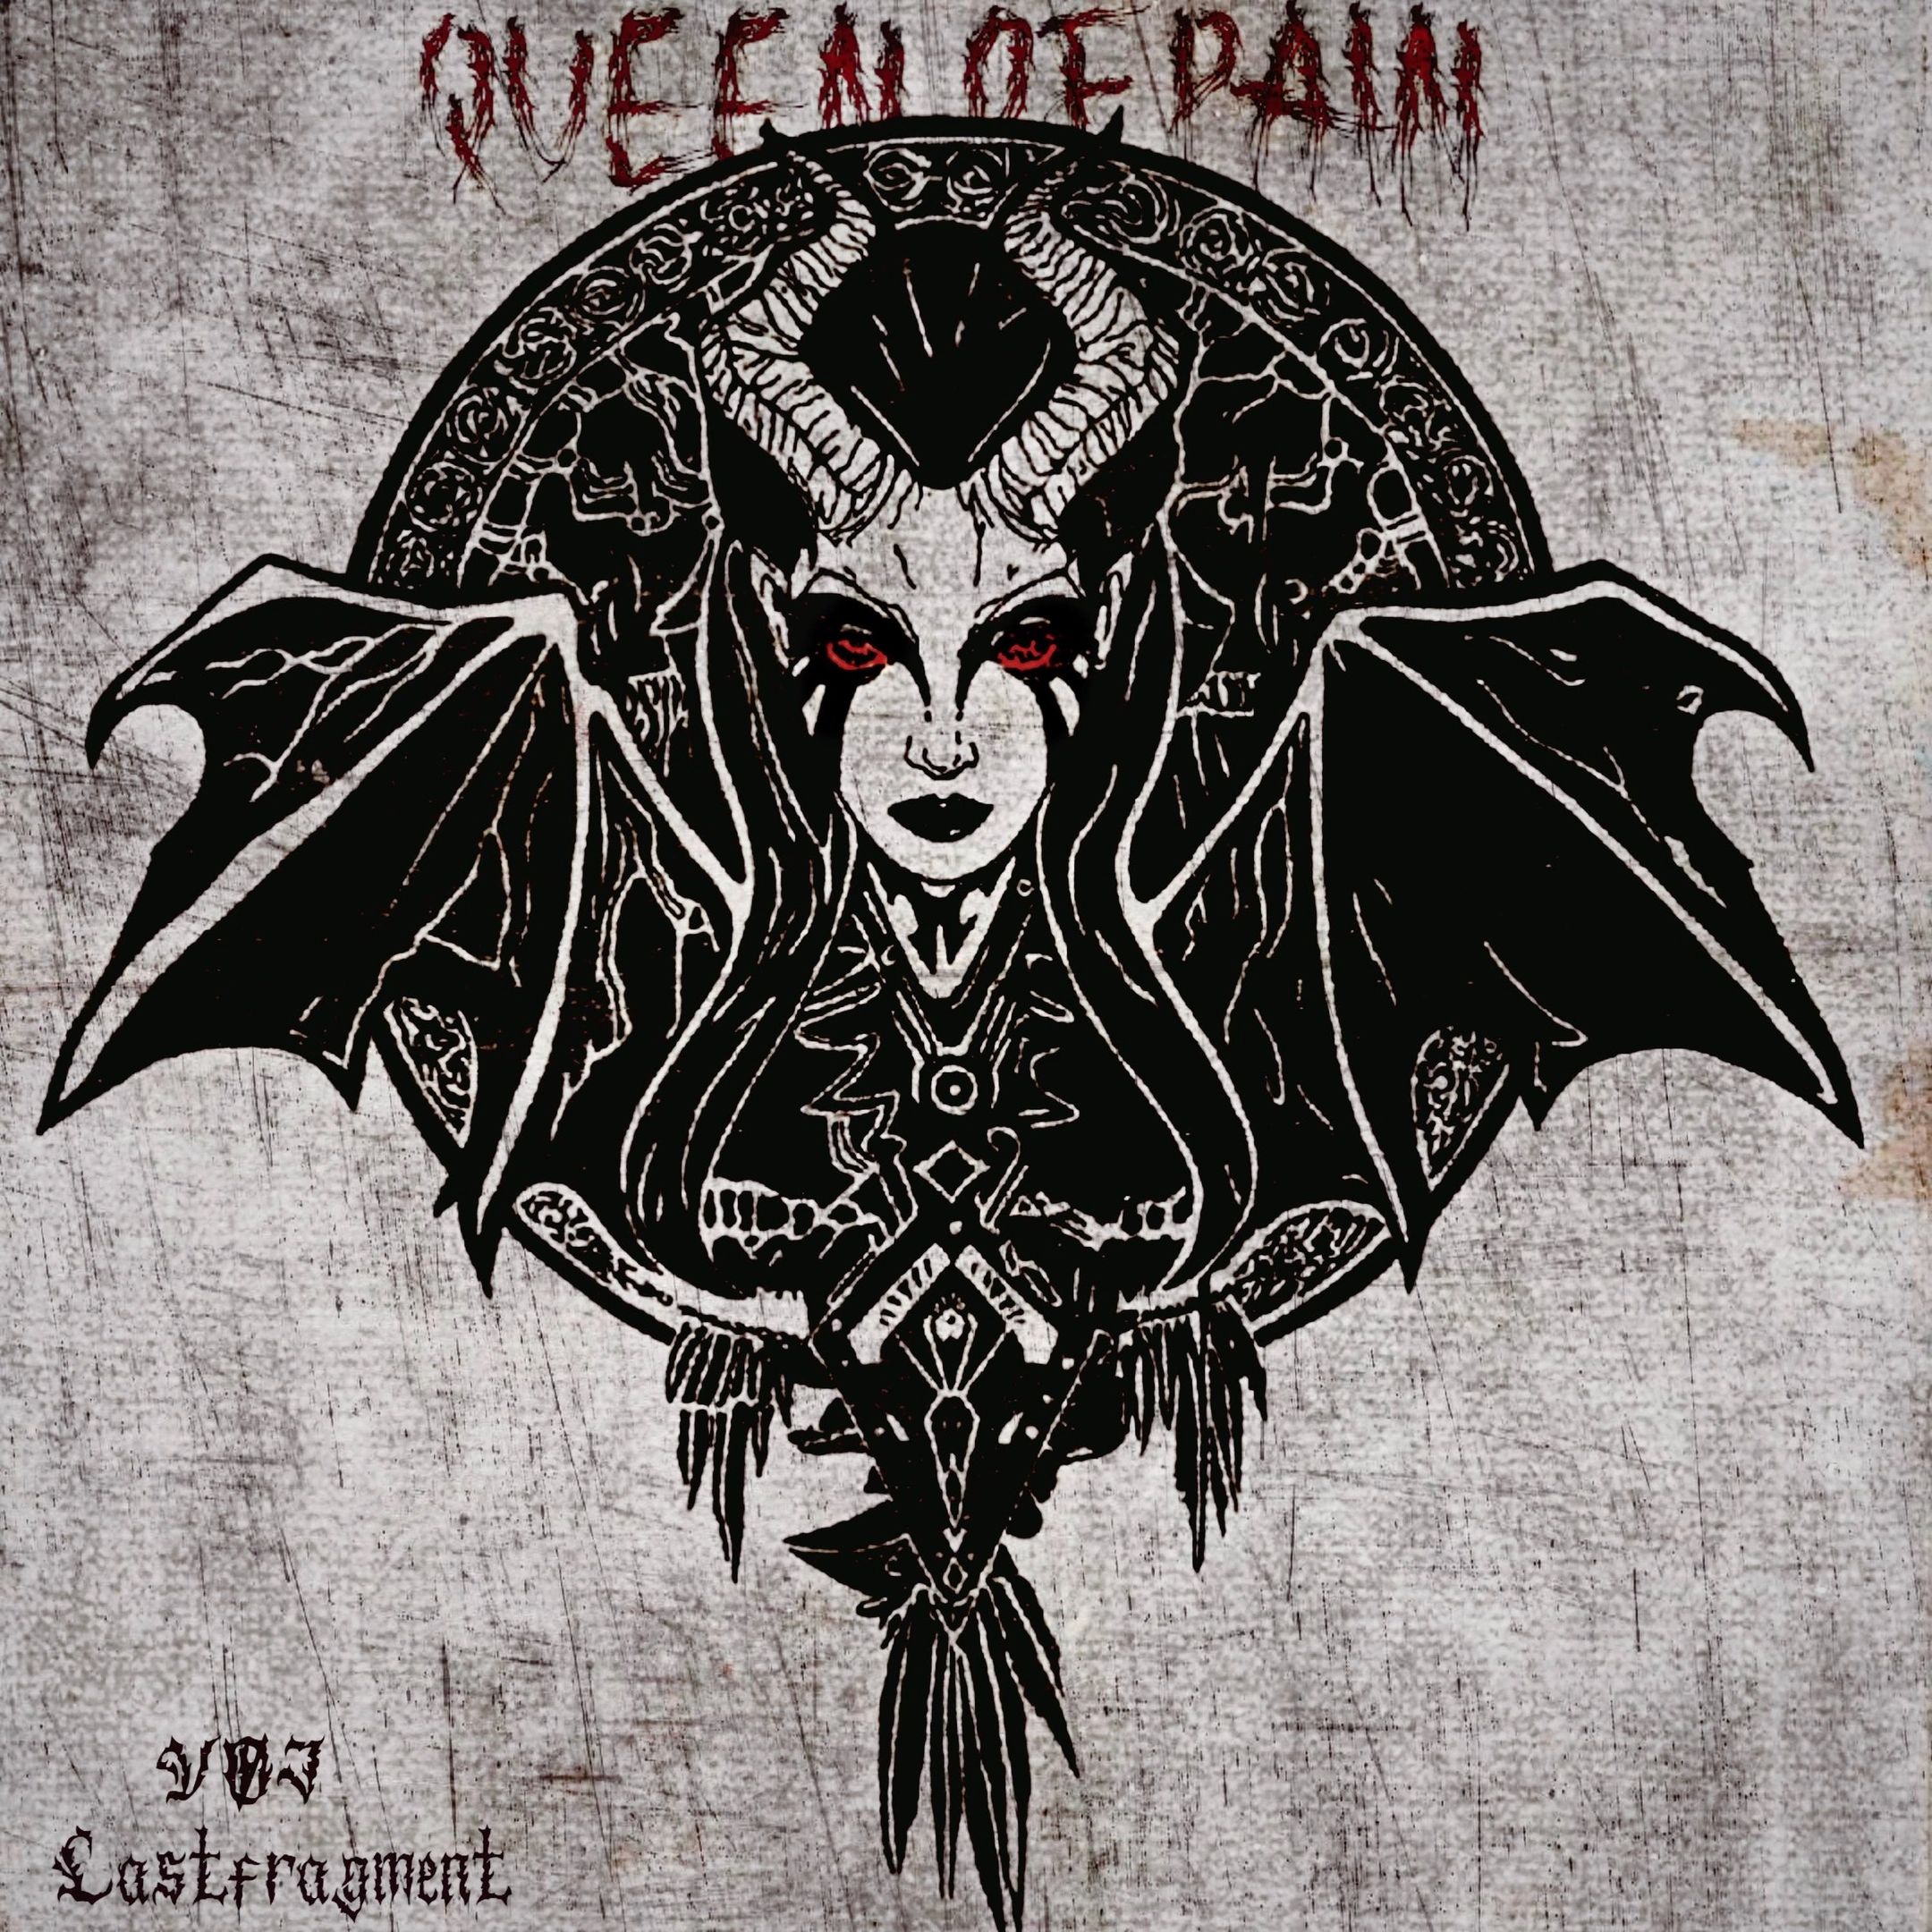 Pobierać VØJ & Lastfragment - Queen of Pain